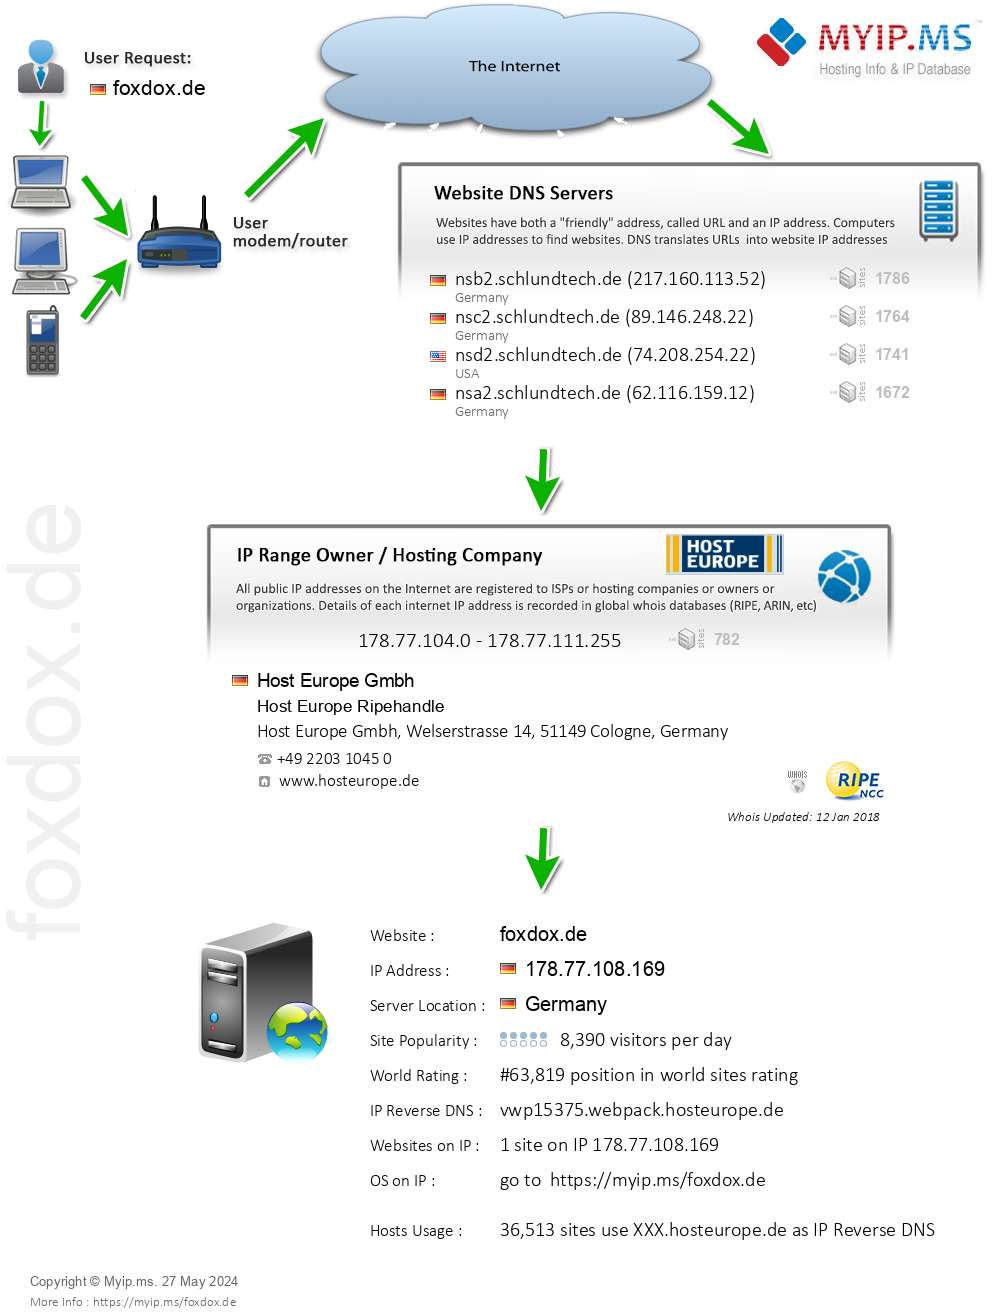 Foxdox.de - Website Hosting Visual IP Diagram